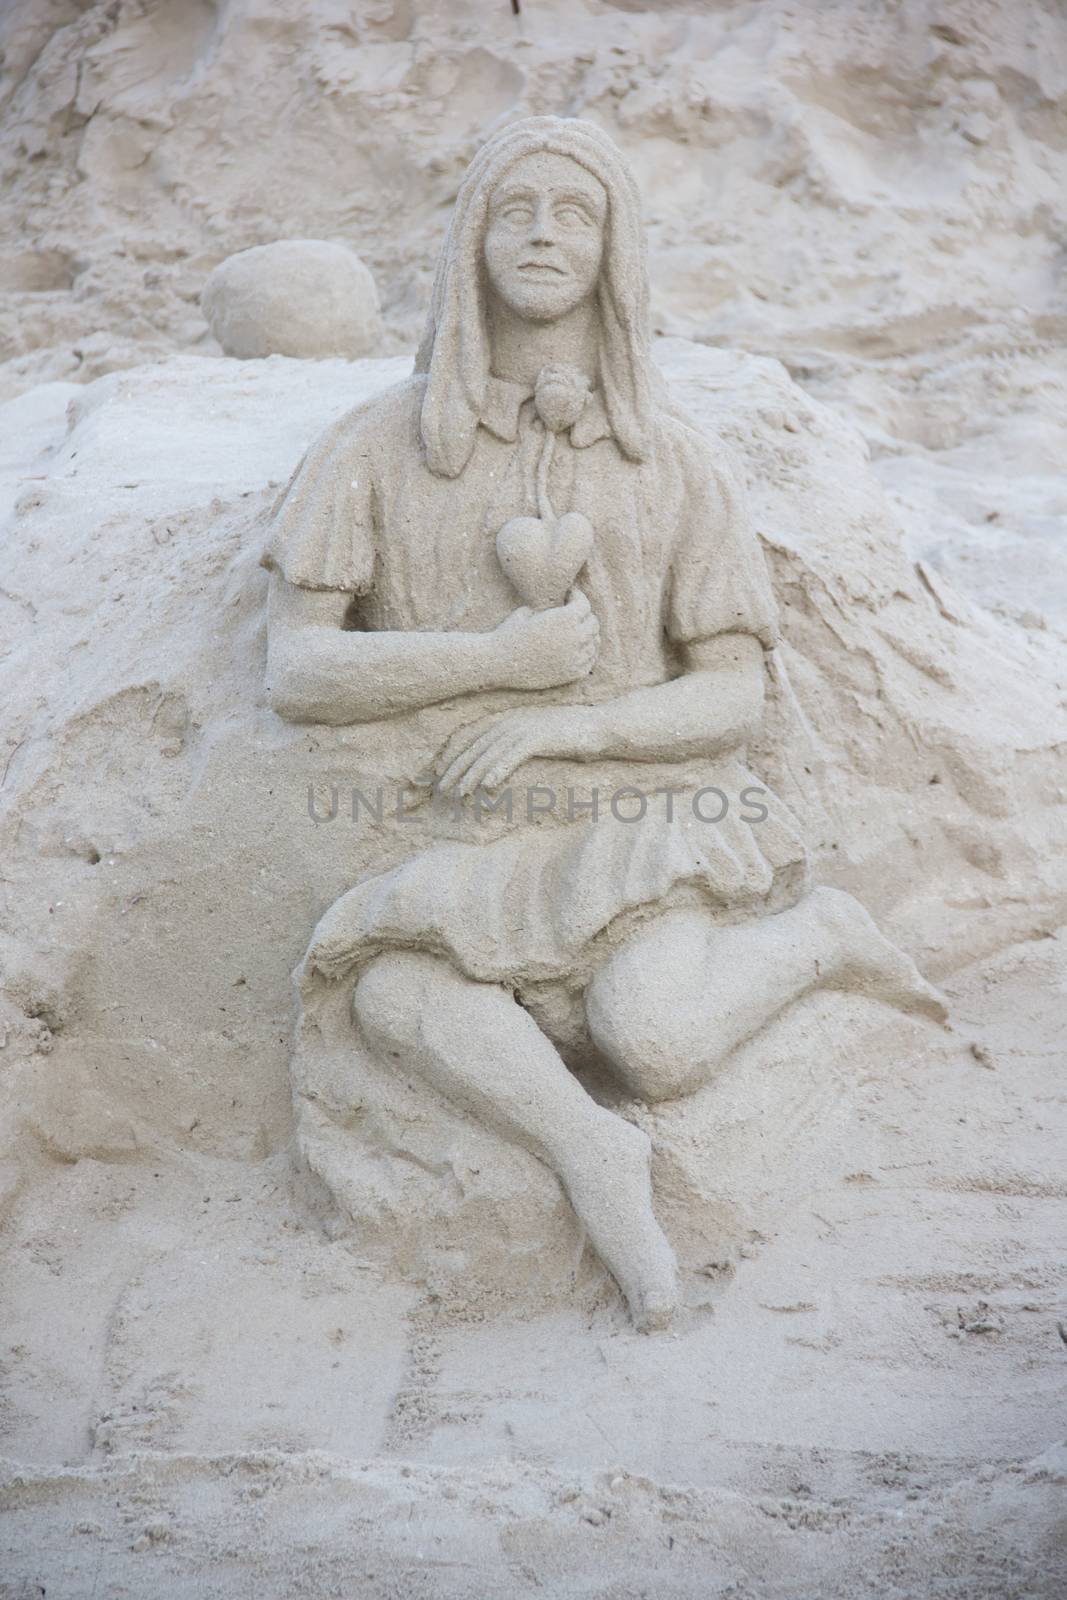 Sand sculpture of a woman